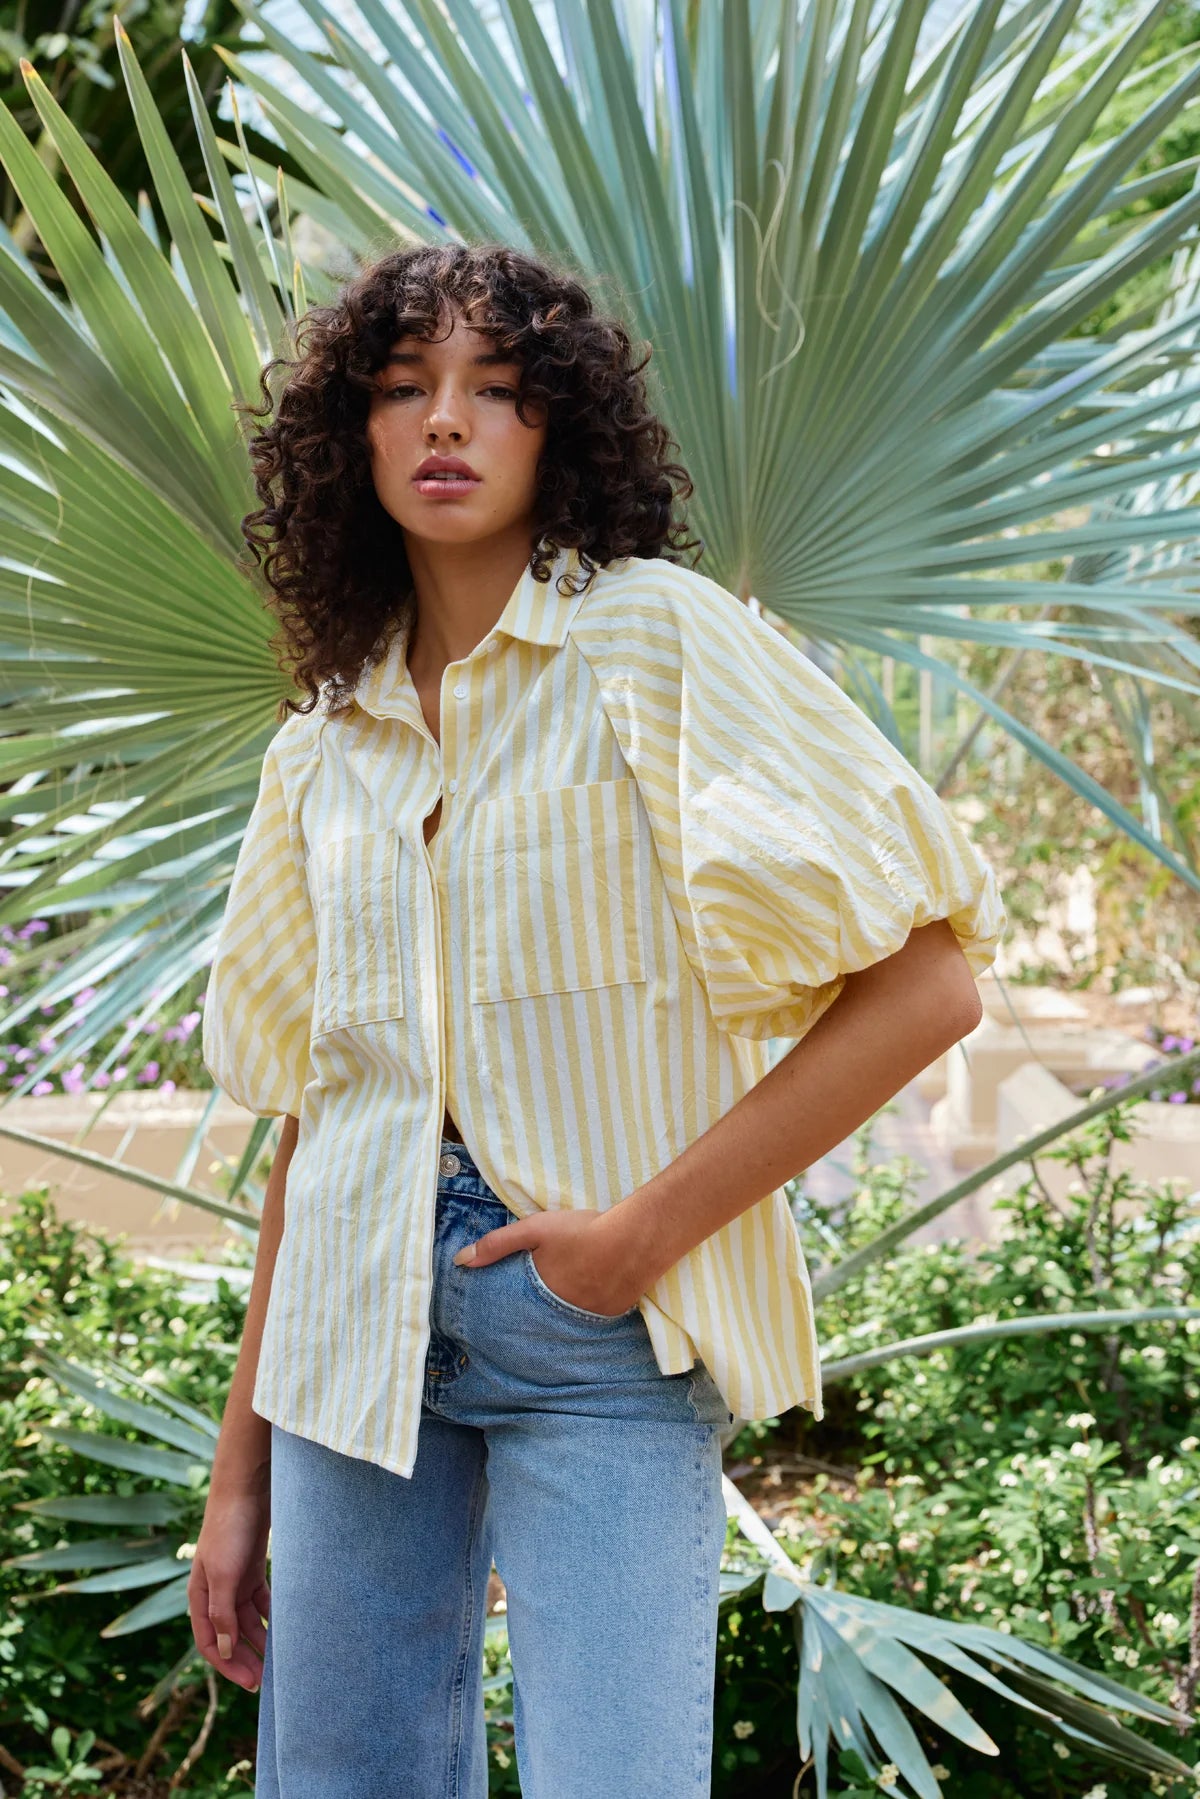 Kinney Zoya Shirt in Lemon Stripe